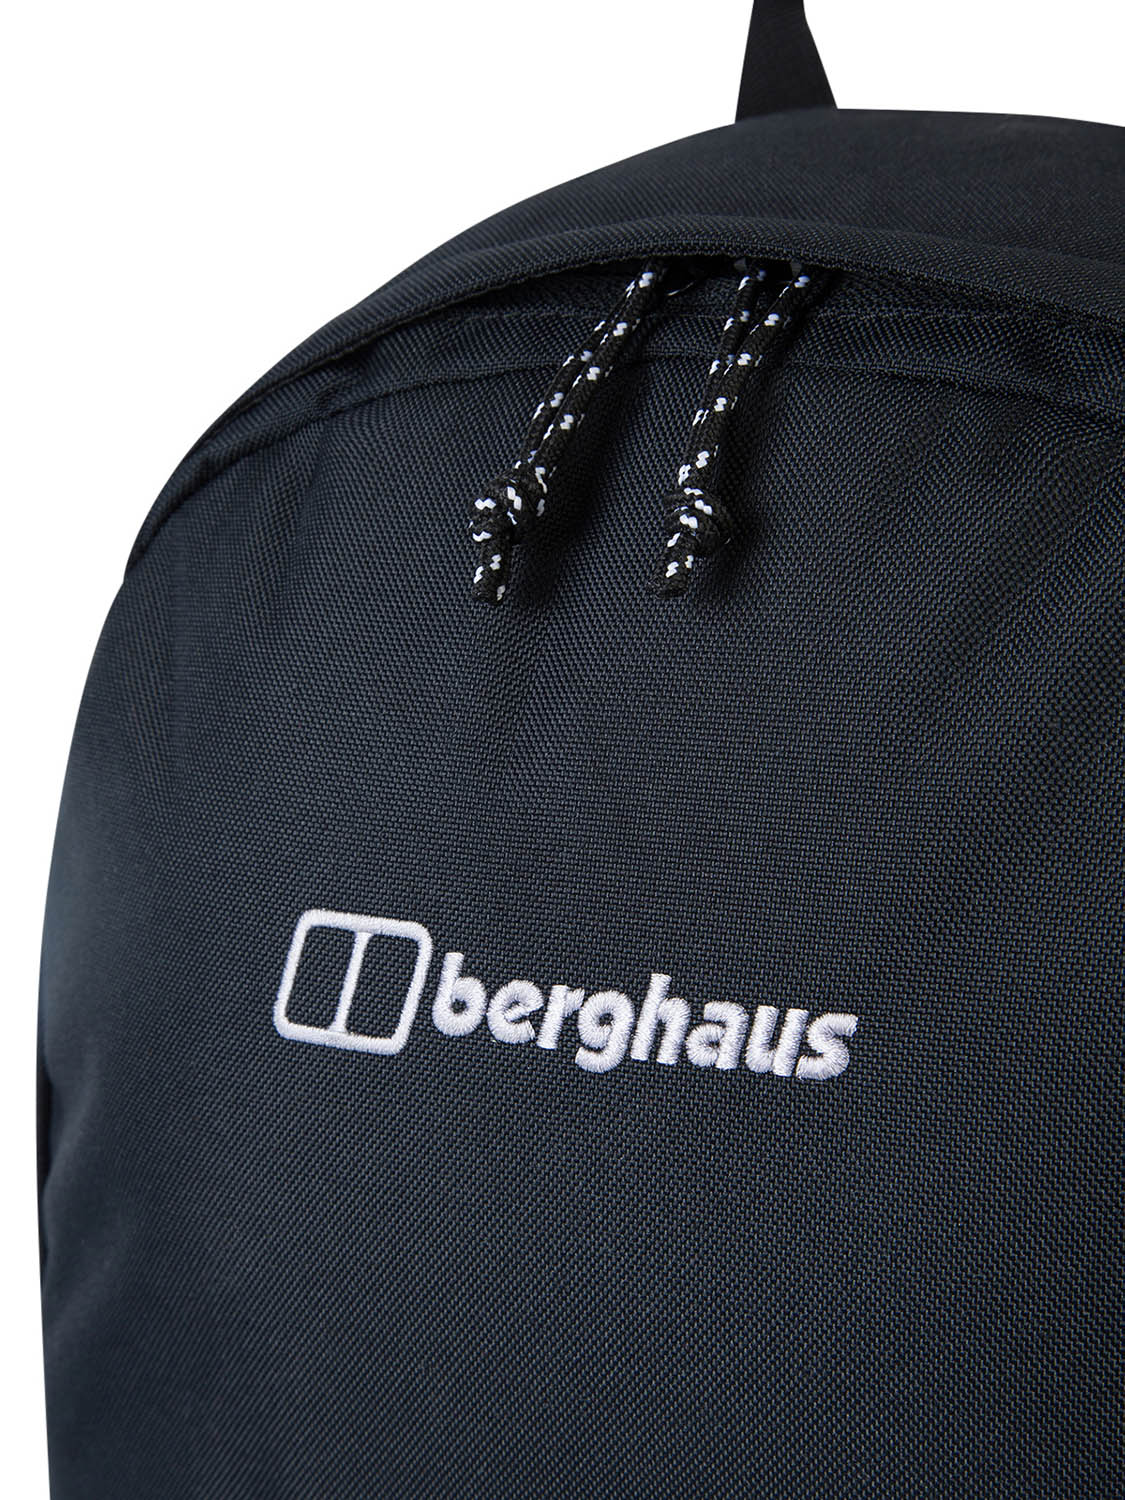 Berghaus Brand Bag 25 Backpack - Black / Dark Grey